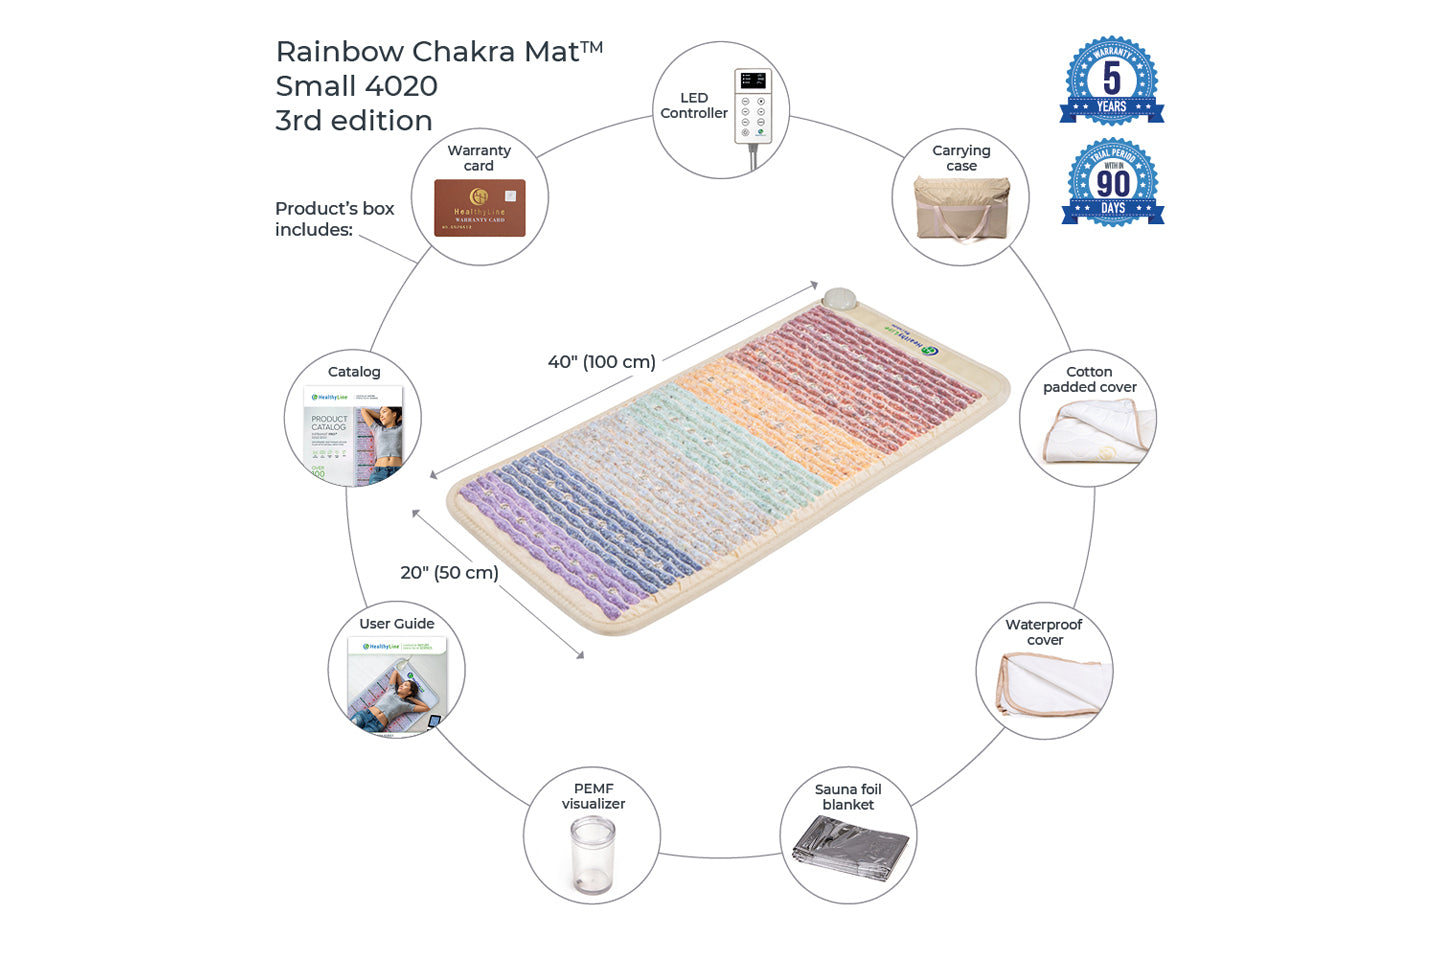 HealthyLine Rainbow Chakra Mat Small 4020 Firm - Photon PEMF Inframat Pro 3rd Edition - 15